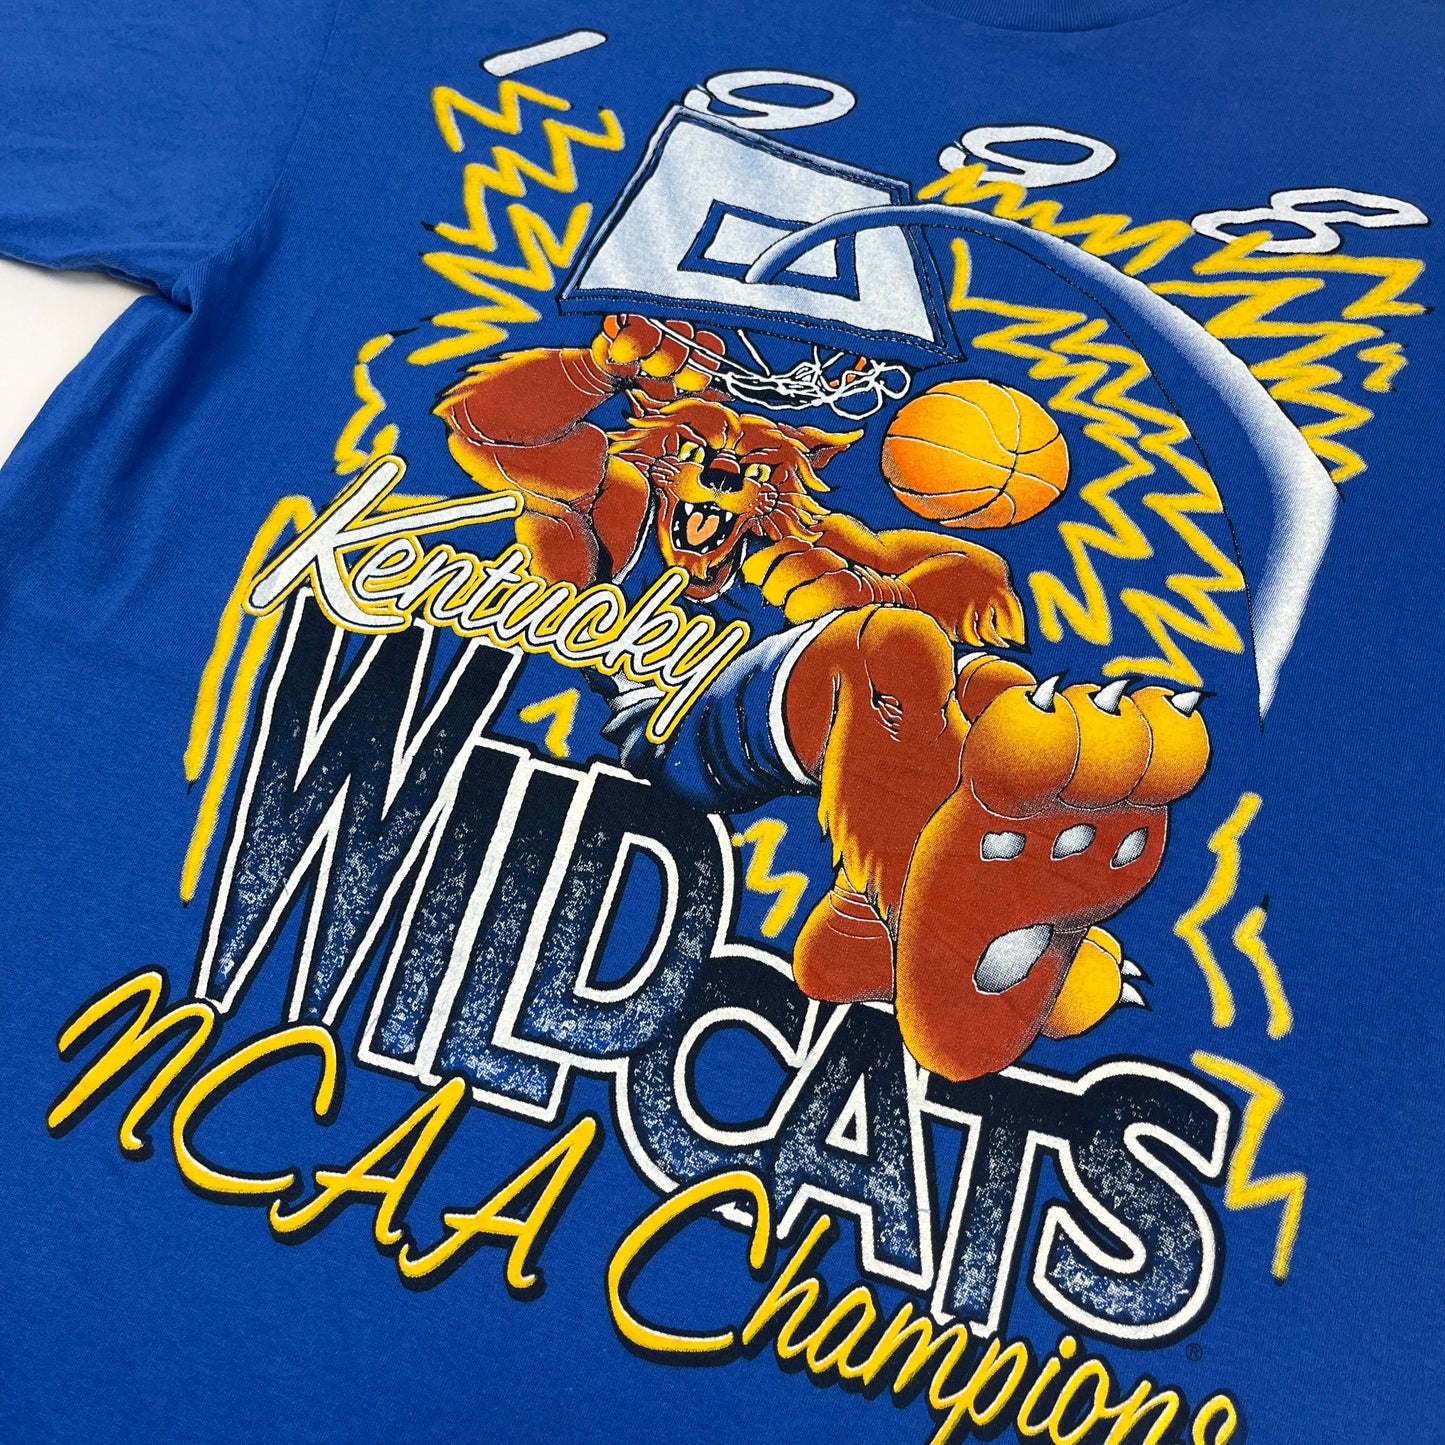 01480 90s Arizona Wilcats Basketball Tshirt